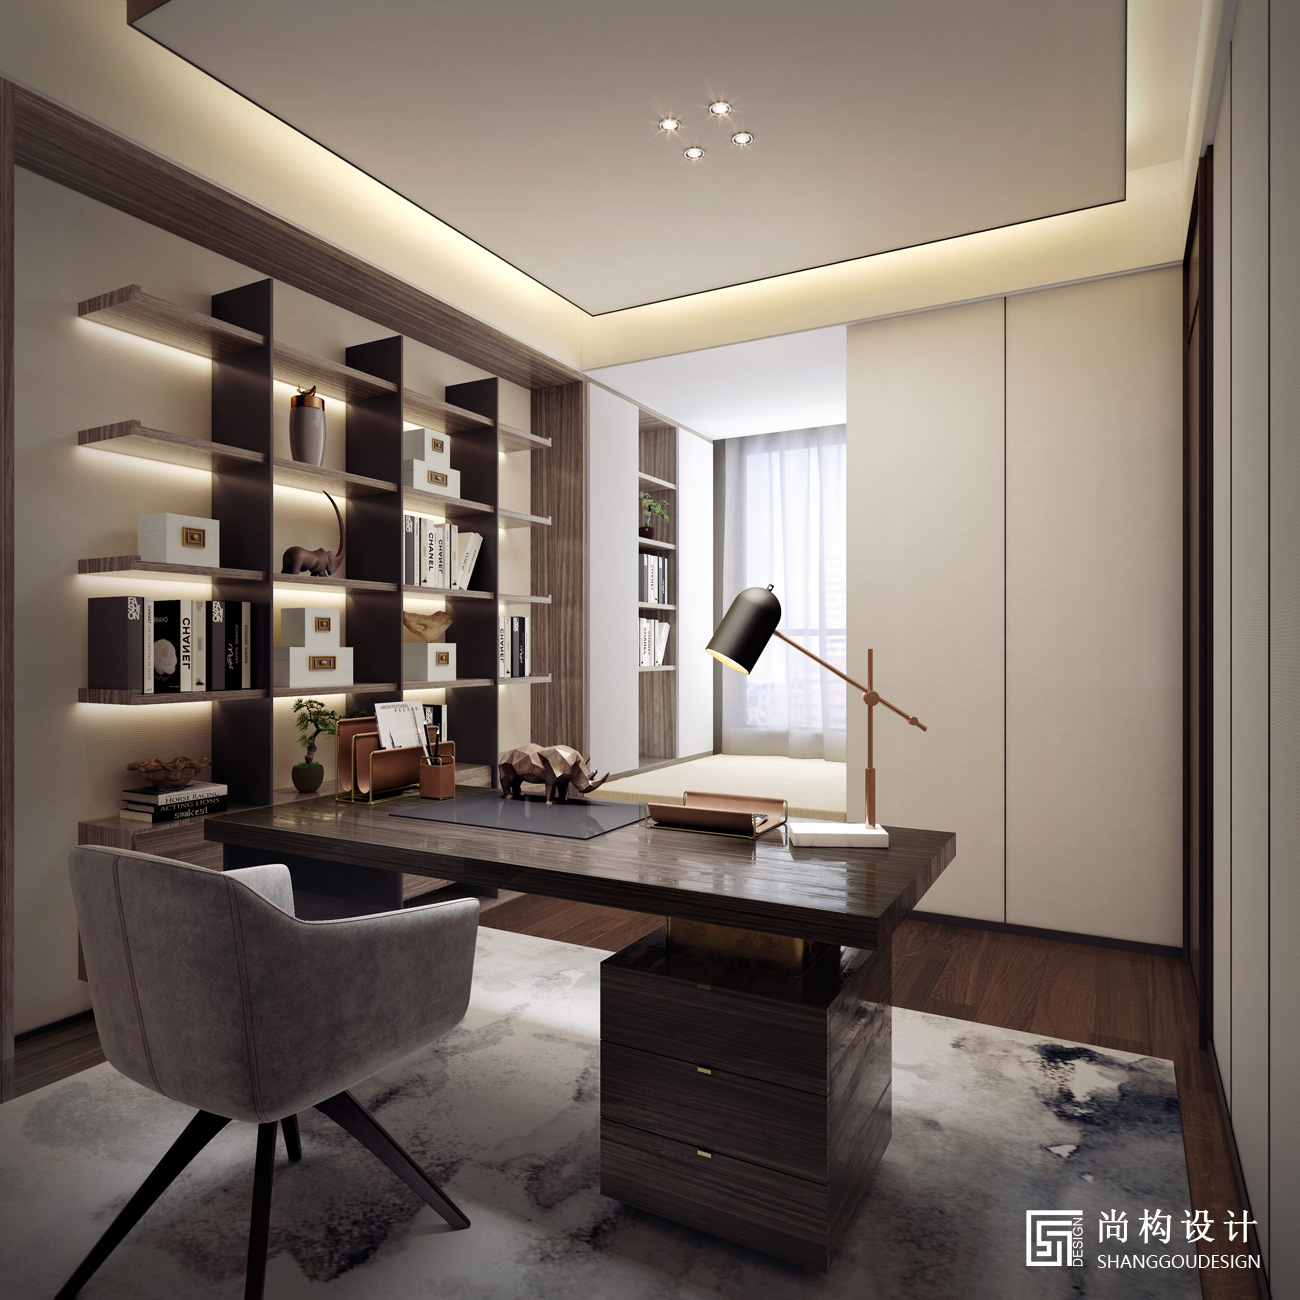 Xuchang-Small Sized Apartment